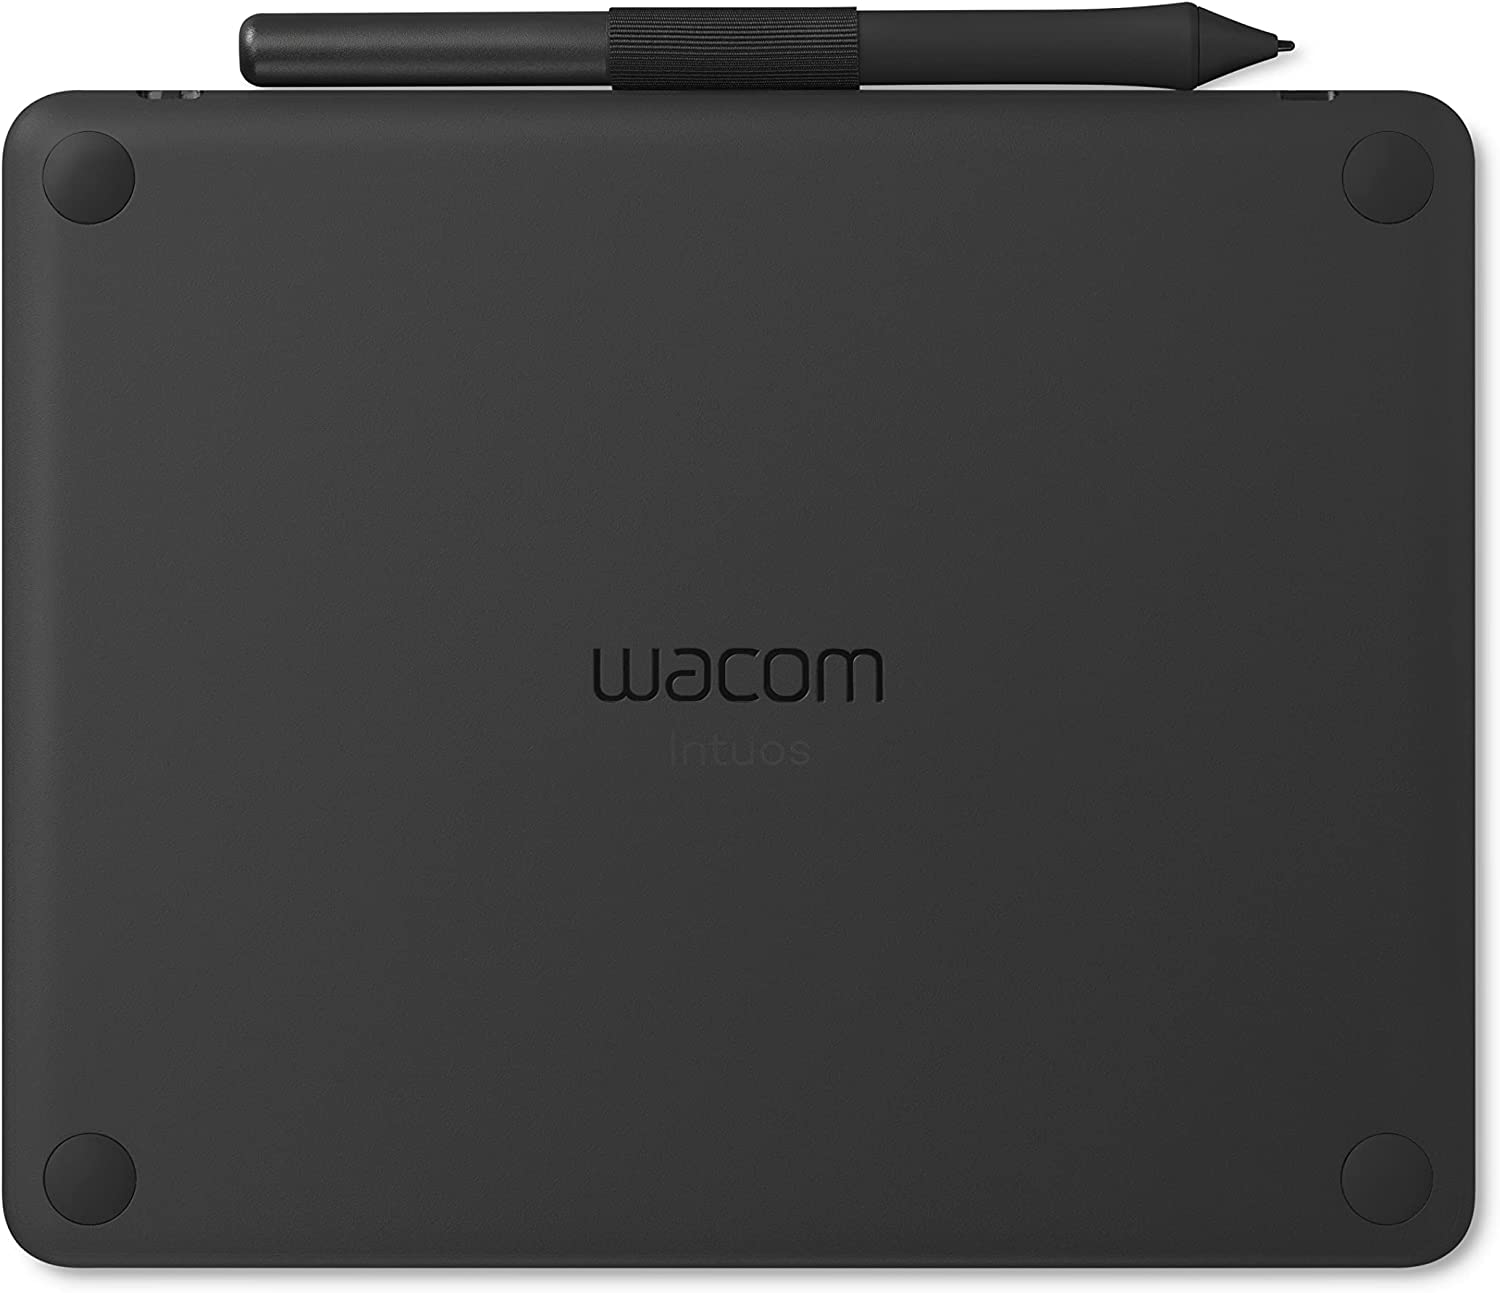 Wacom Intuos Graphics Drawing Tablet closed